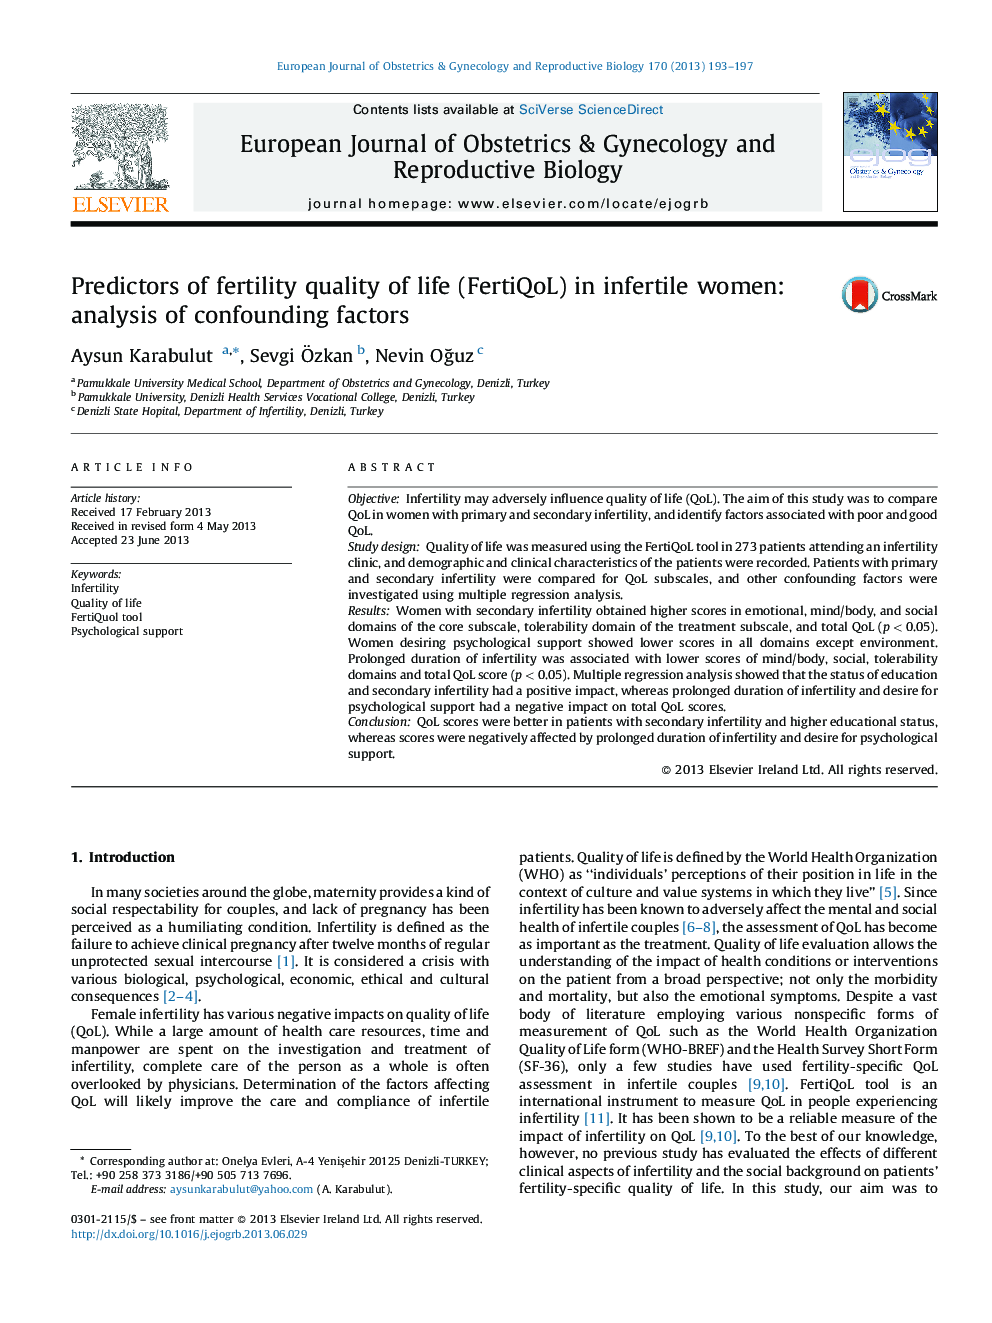 Predictors of fertility quality of life (FertiQoL) in infertile women: analysis of confounding factors